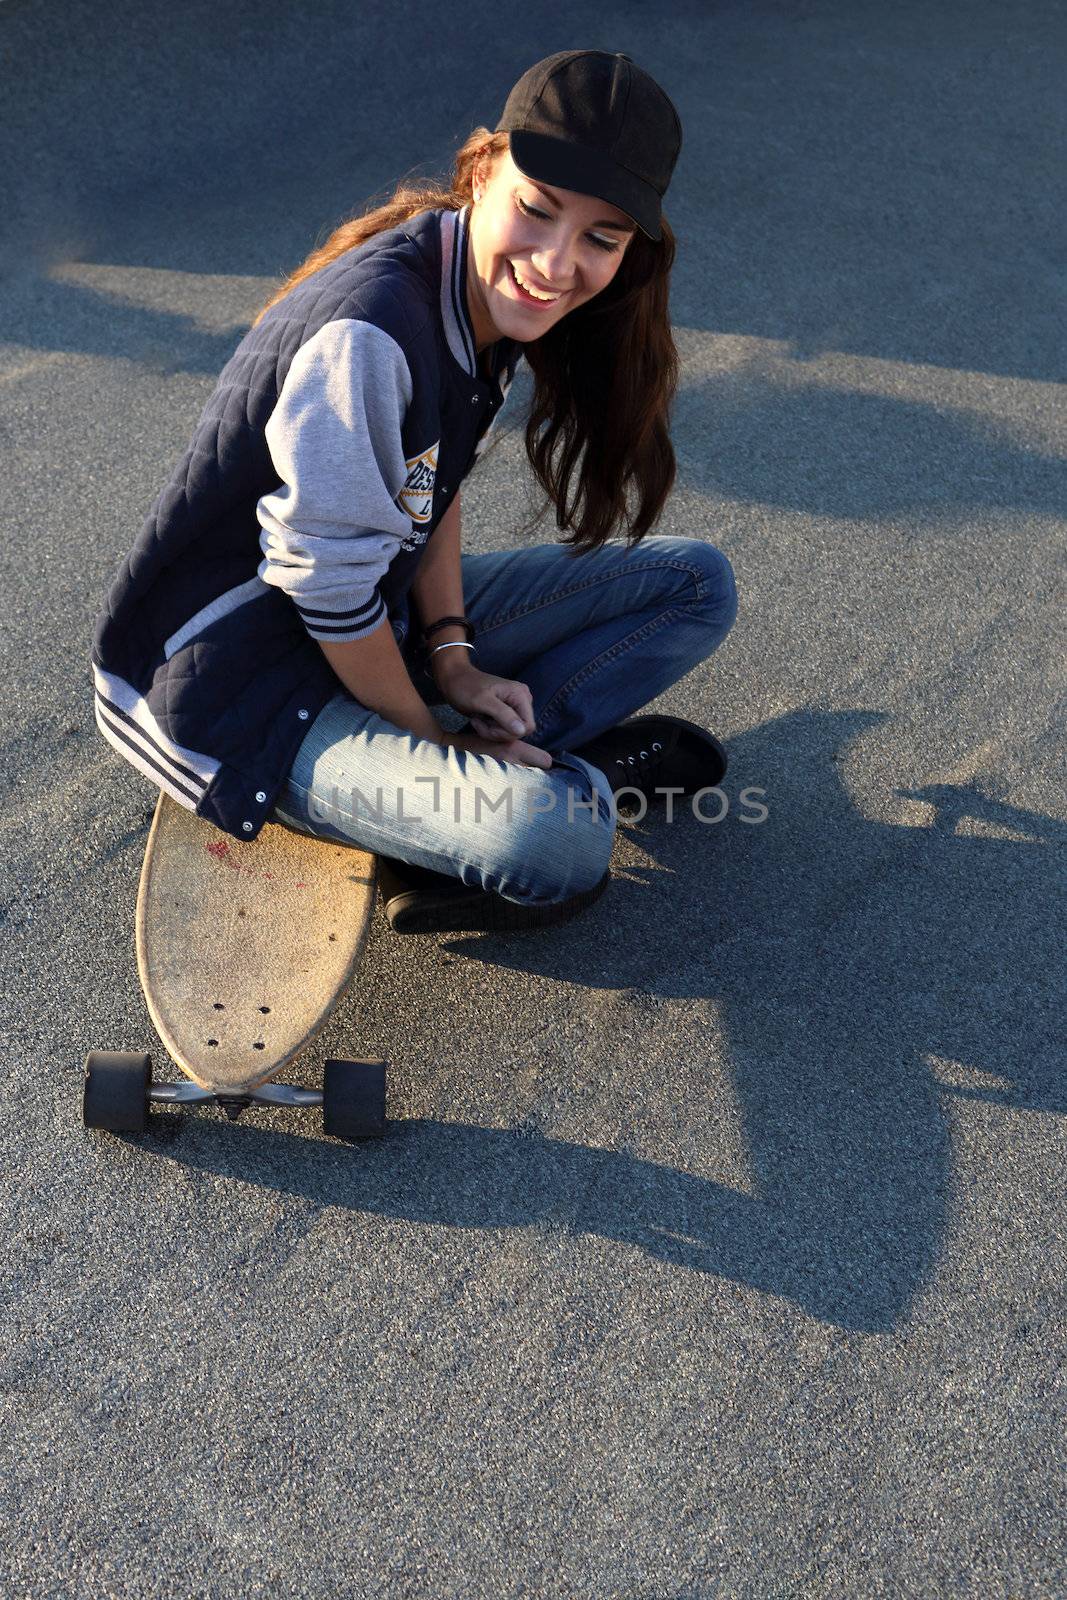 Style and play, skateboard by robert_przybysz